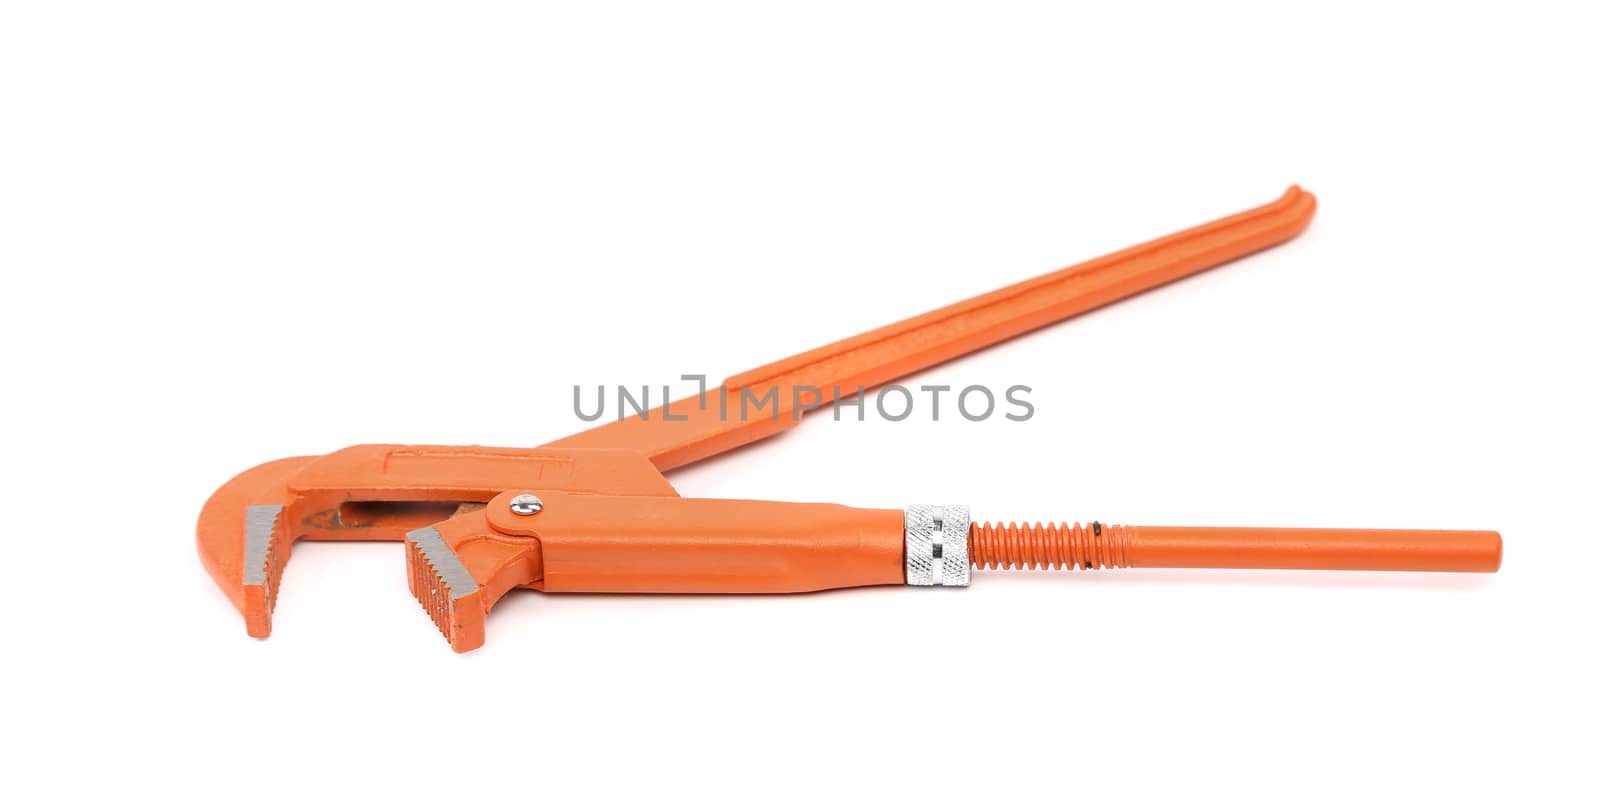 Orange alligator wrench by indigolotos